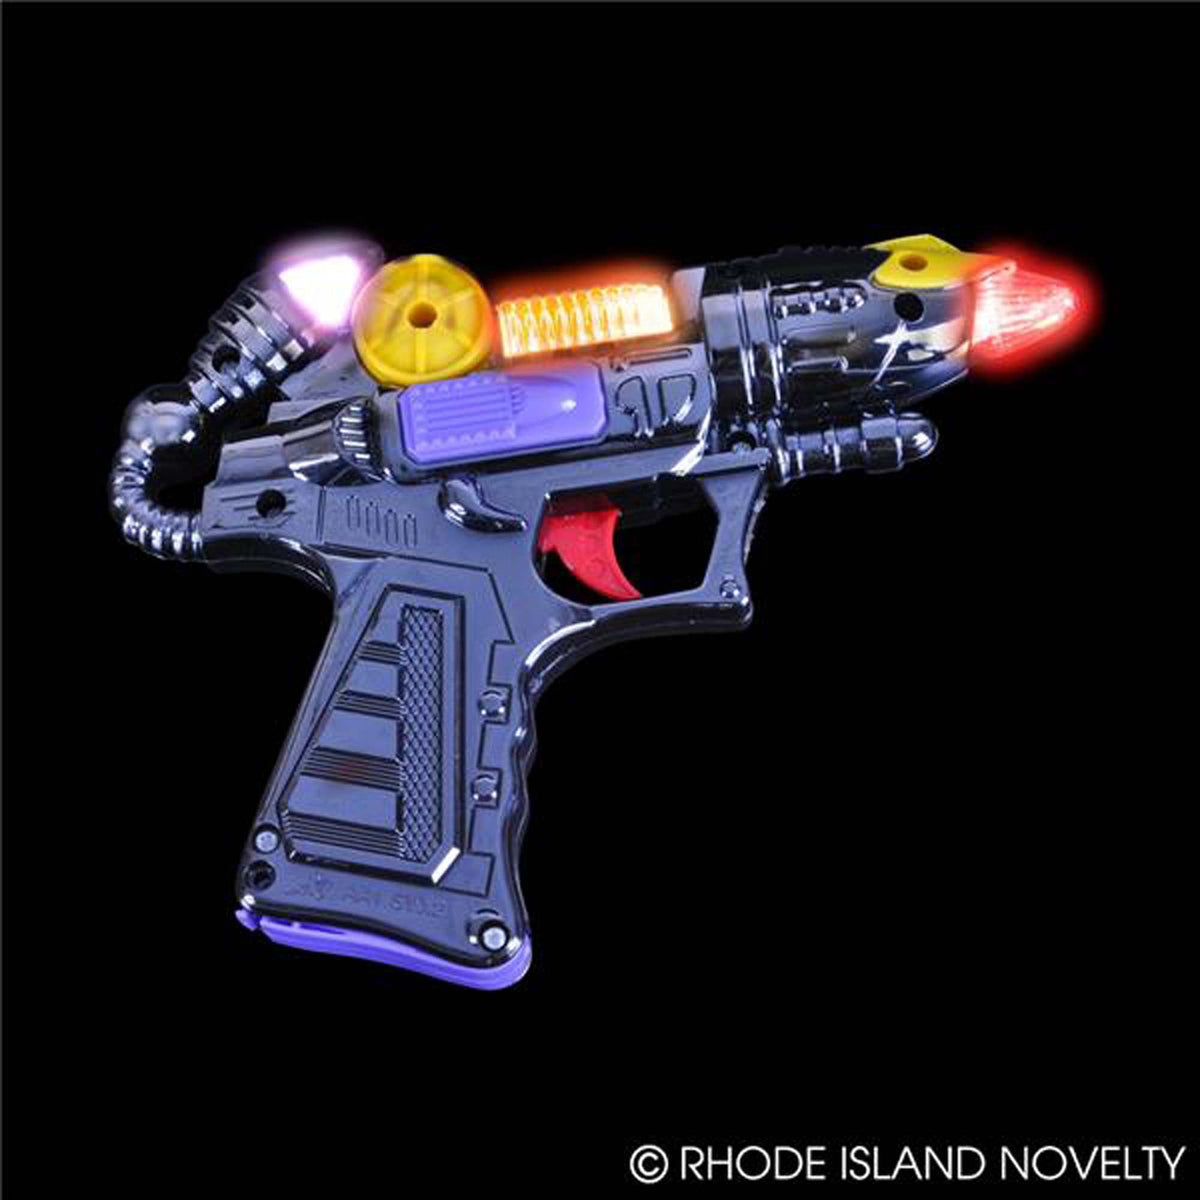 RHODE ISLAND NOVELTY impulse buying Light Blaster Gun, Assortment, 7 Inches, 1 Count